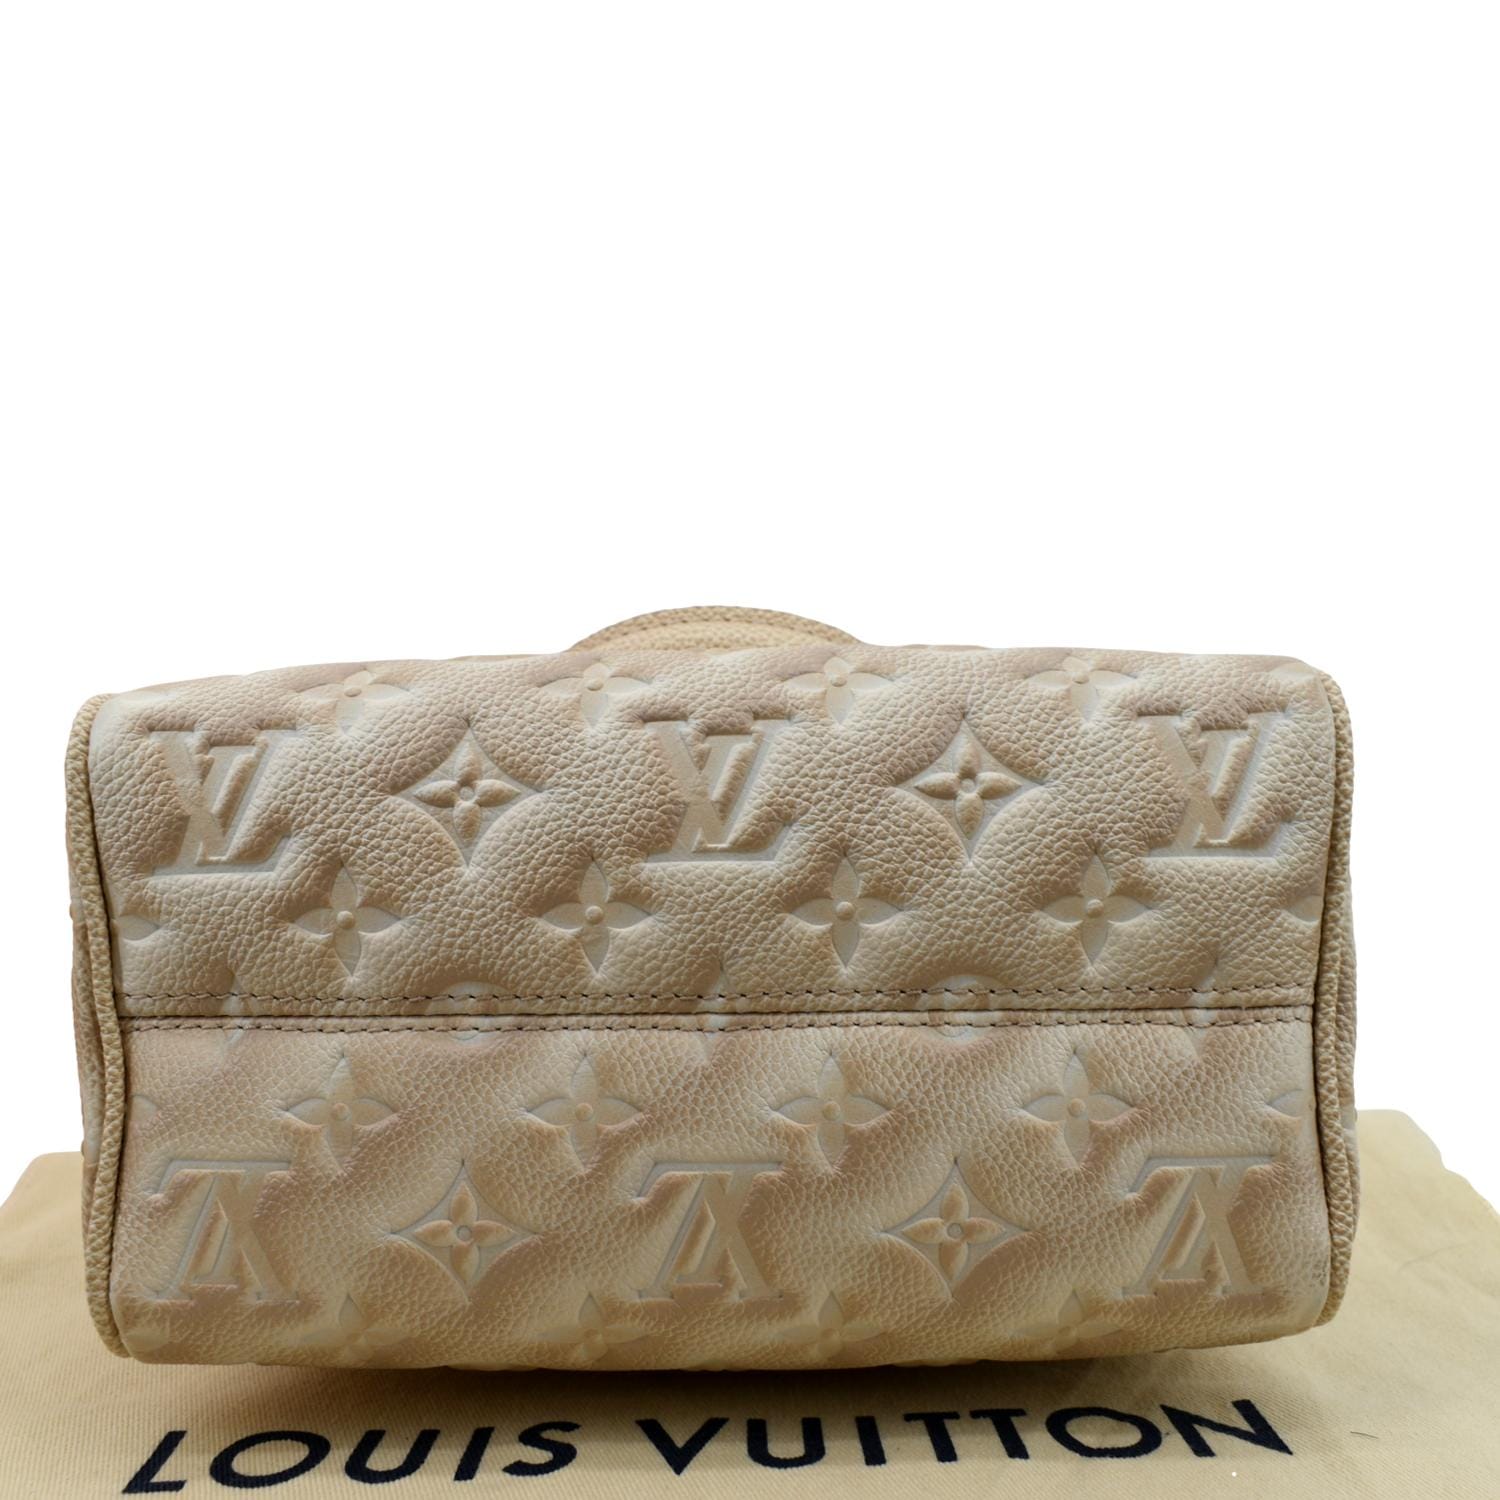 Brand new Louis Vuitton speedy bandouliere 20 from stardust